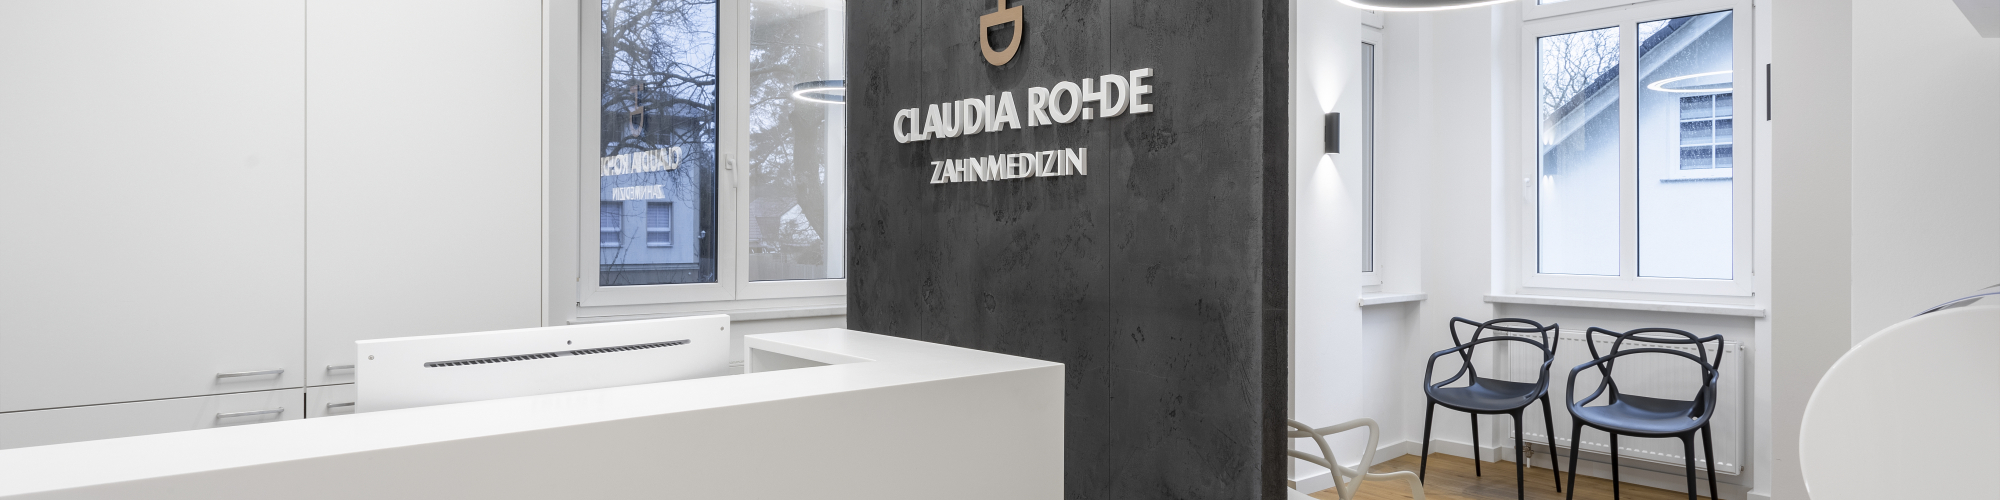 Zentrum für Zahnmedizin Claudia Rohde GmbH